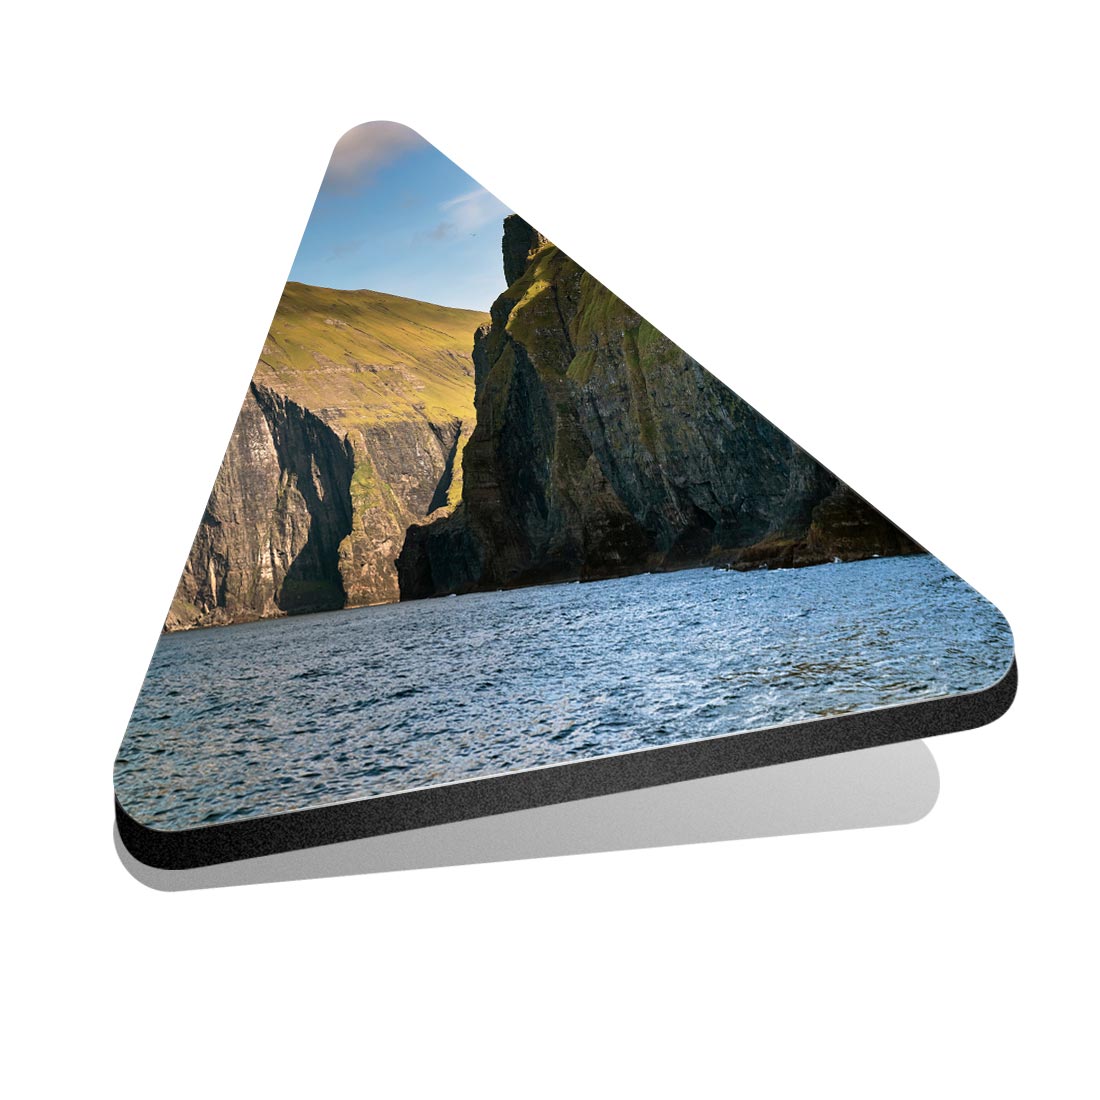 1x Triangle Fridge MDF Magnet Vestmanna Cliffs Faroe Islands Denmark #52350 - Picture 1 of 1